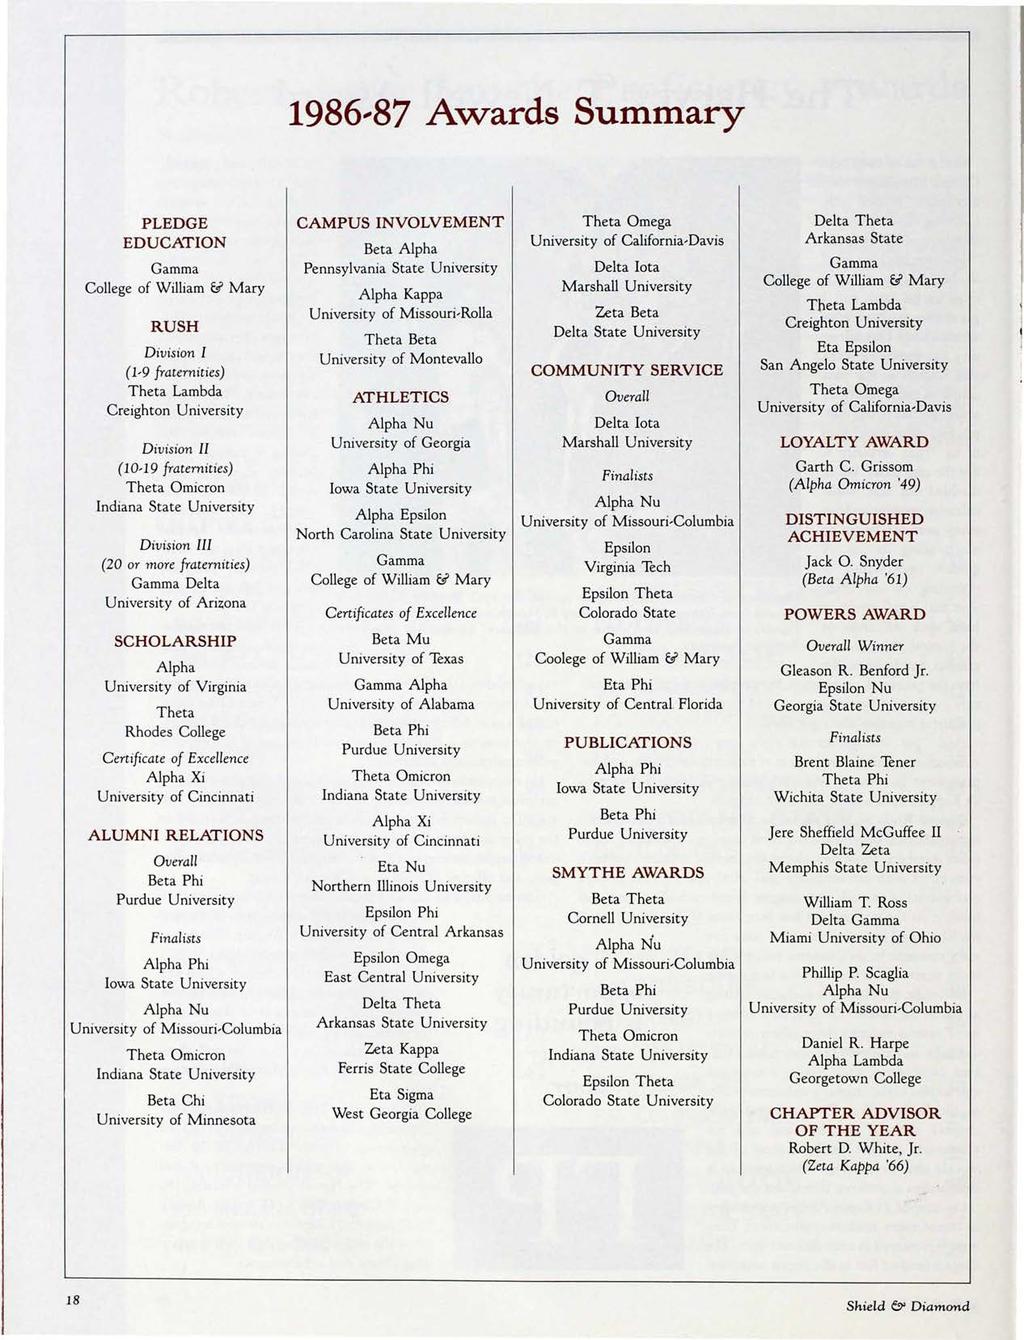 1986.. 87 Awards Summary PLEDGE EDUCATION Gamma College of William & Mary RUSH Division I (1-9 fraternities) Theta Lambda Creighton University Division II (10-19 fraternities) Theta Omicron Indiana